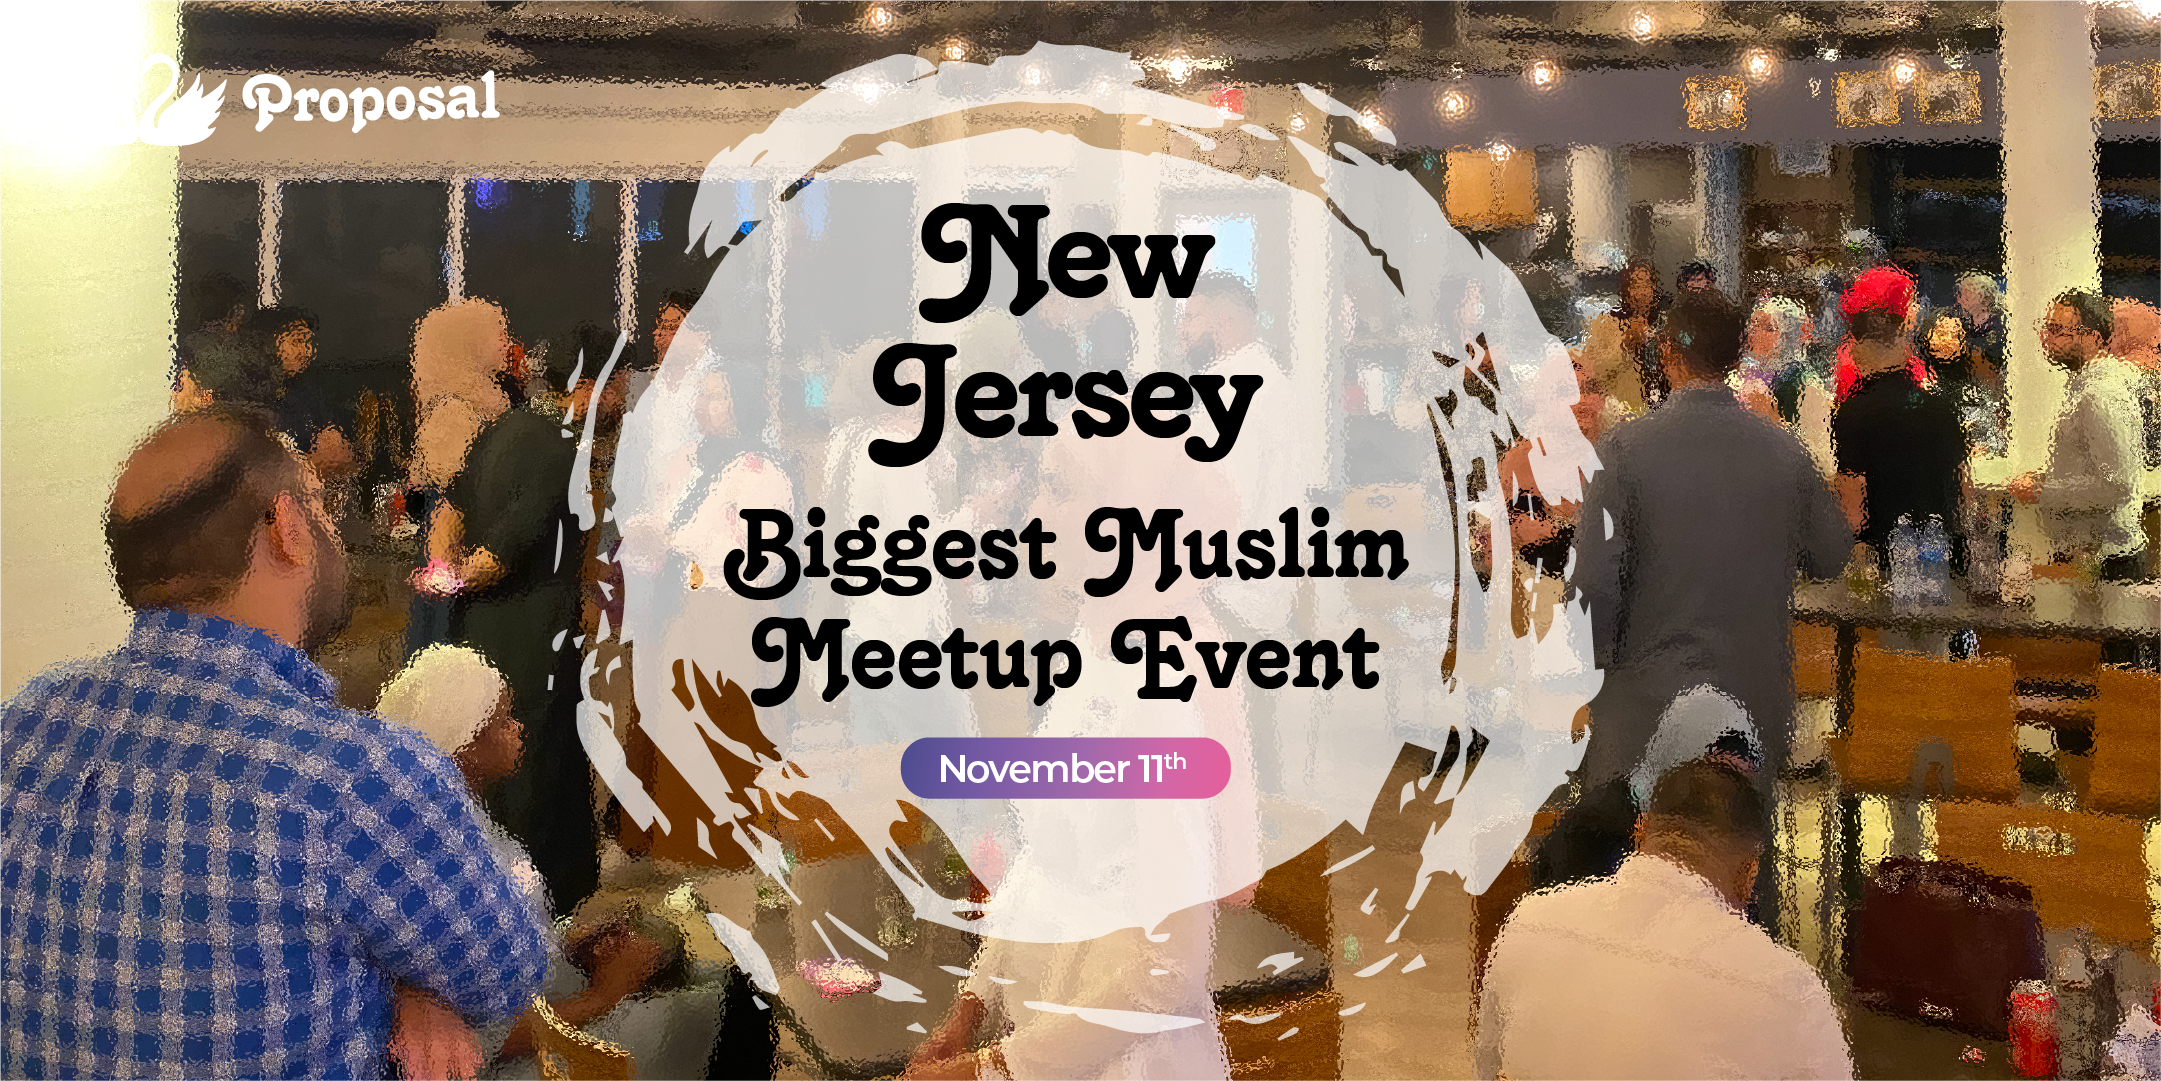 Proposal BIGGEST Muslim Meetup Event New Jersey